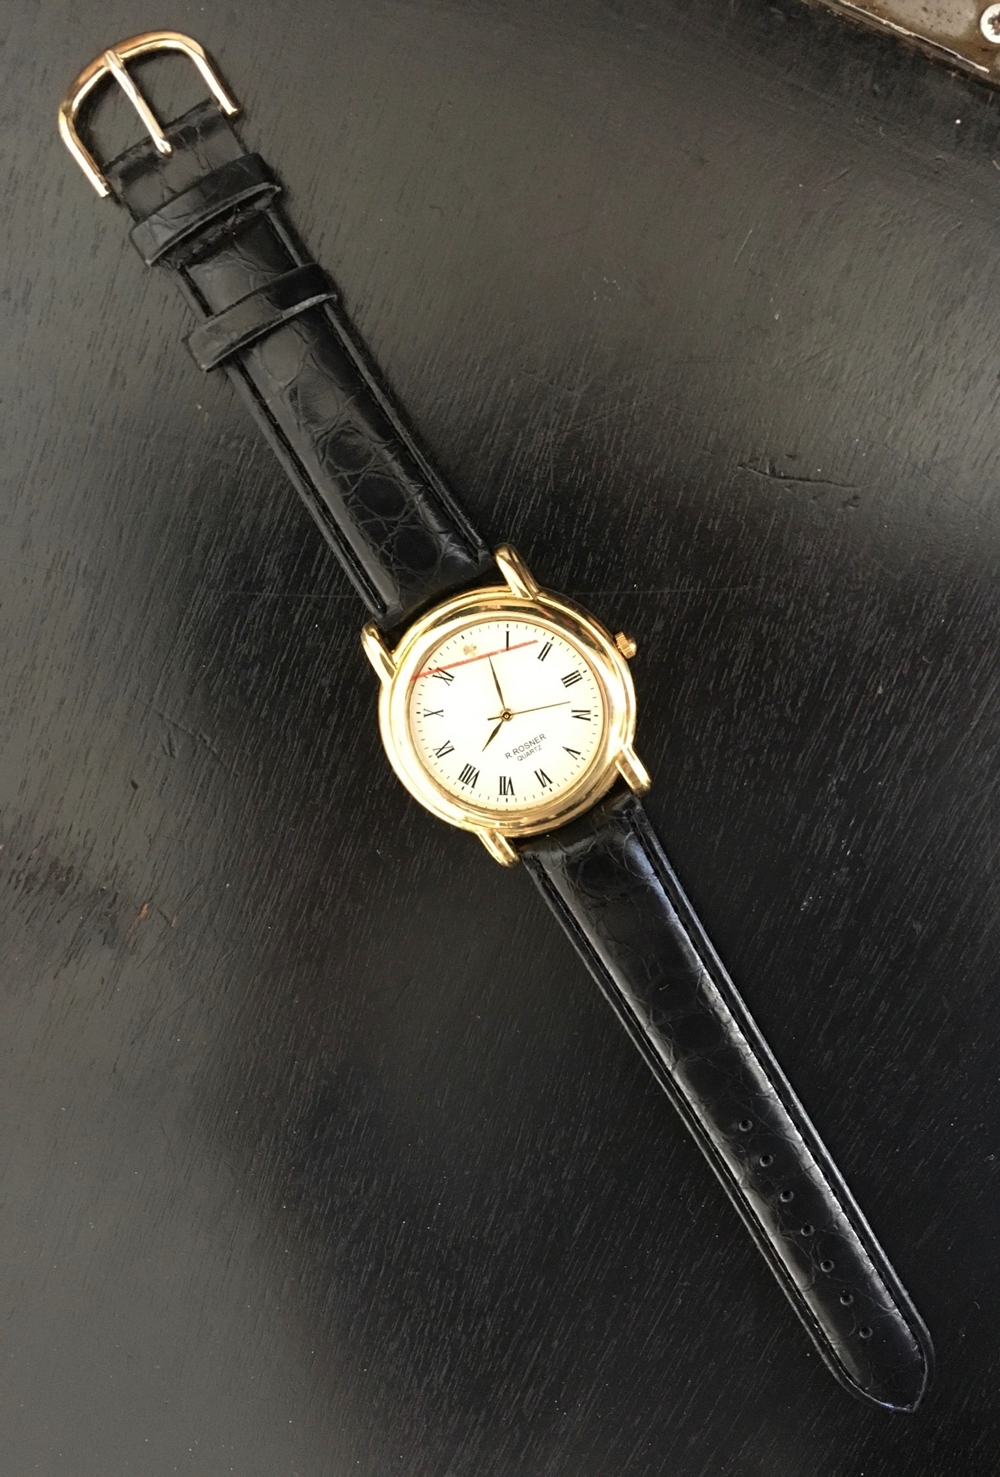 NEU - Armbanduhr von R.Rosner QUARTZ mit Lederband